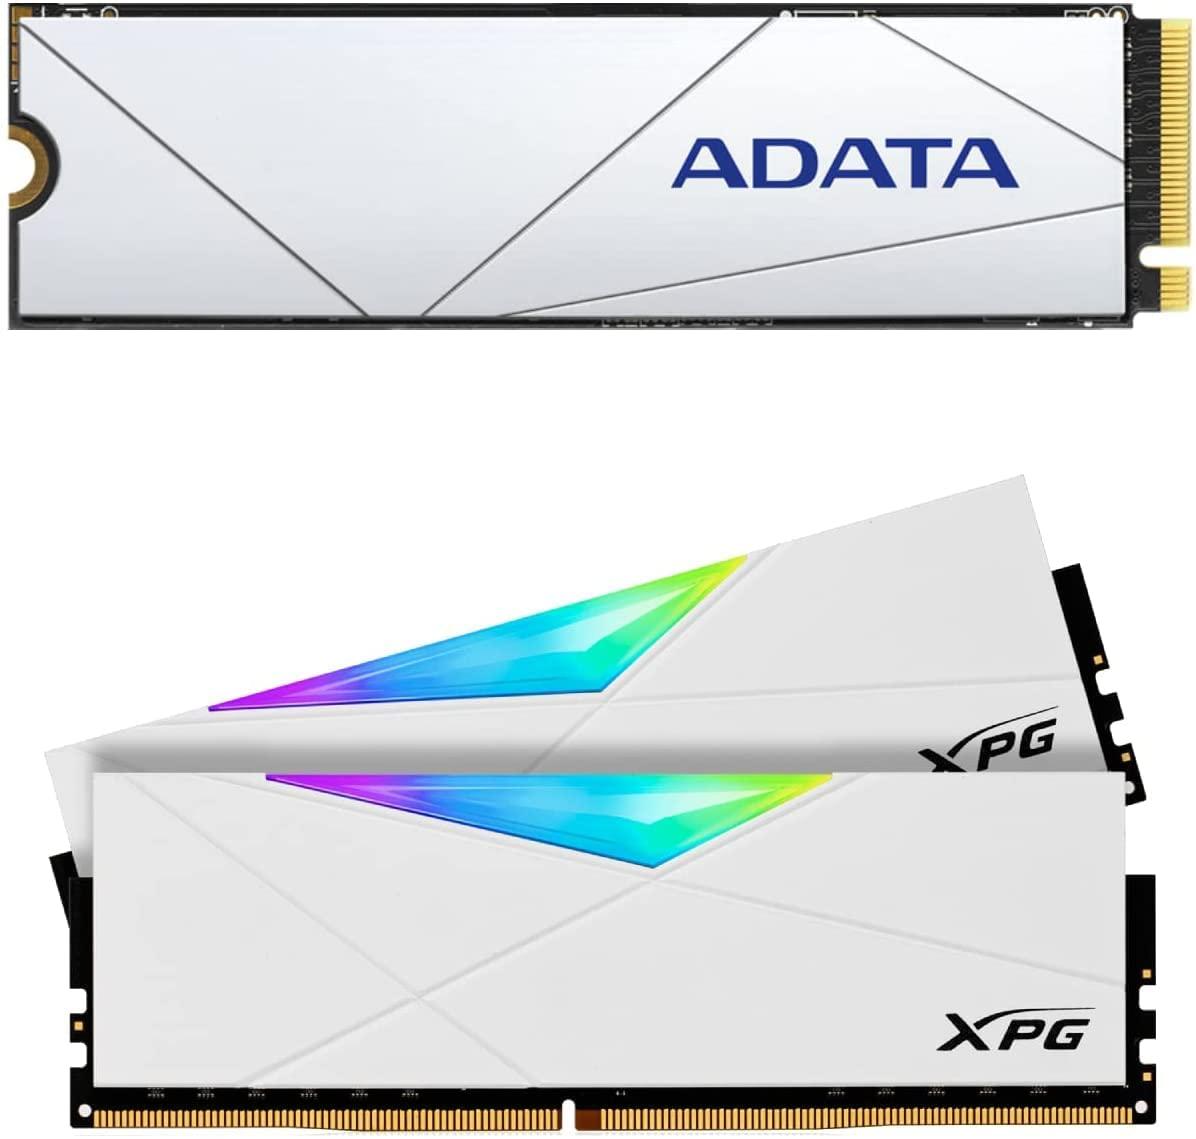 Adata 1TB SSD PCIe with 16GB XPG DDR4 Desktop Memory for $149.99 Shipped